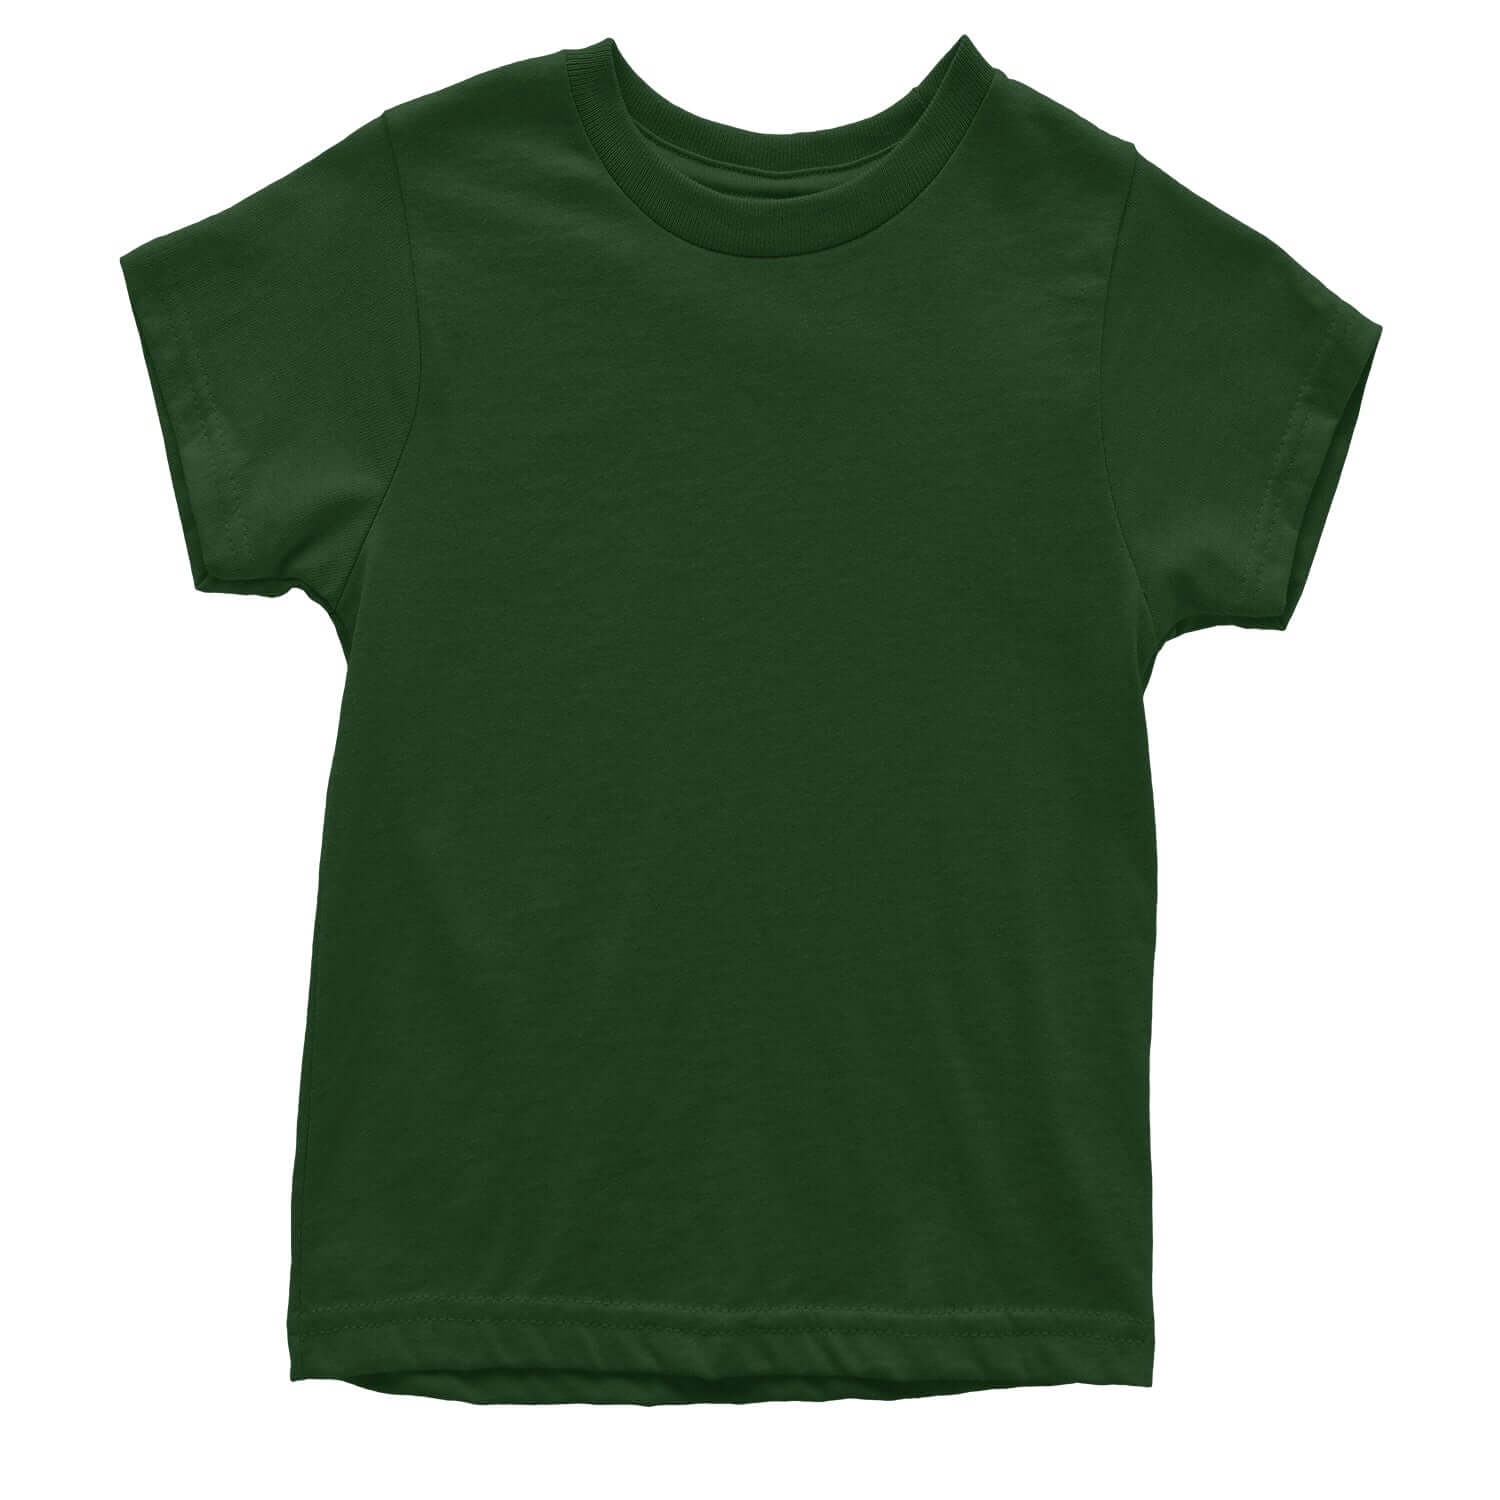 Basics - Plain Blank Youth T-shirt blank, clothing, plain, tshirts by Expression Tees